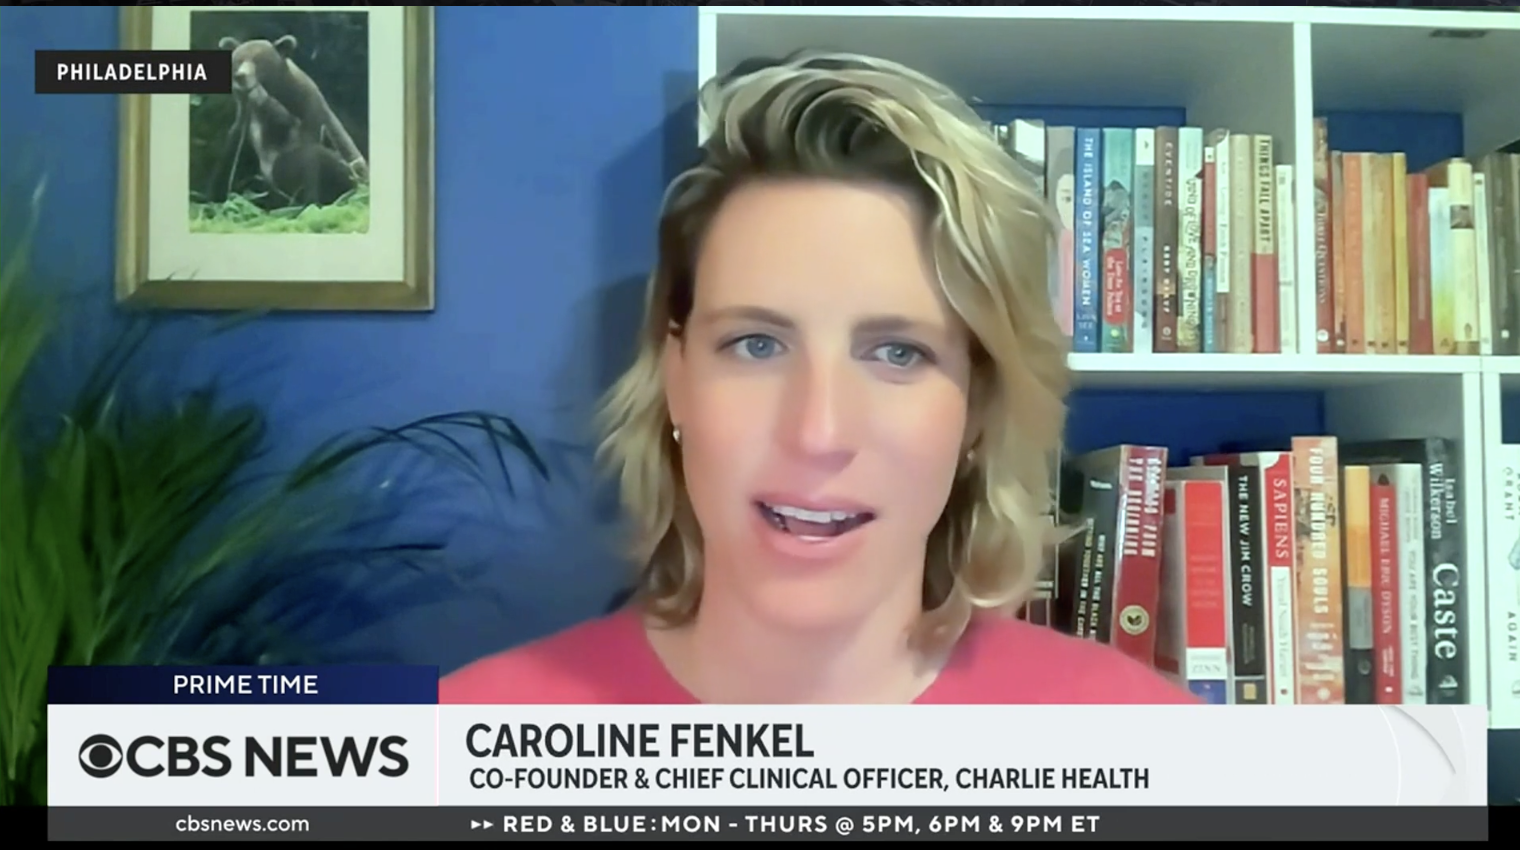 Dr. Caroline Fenkel on cbs news screenshot